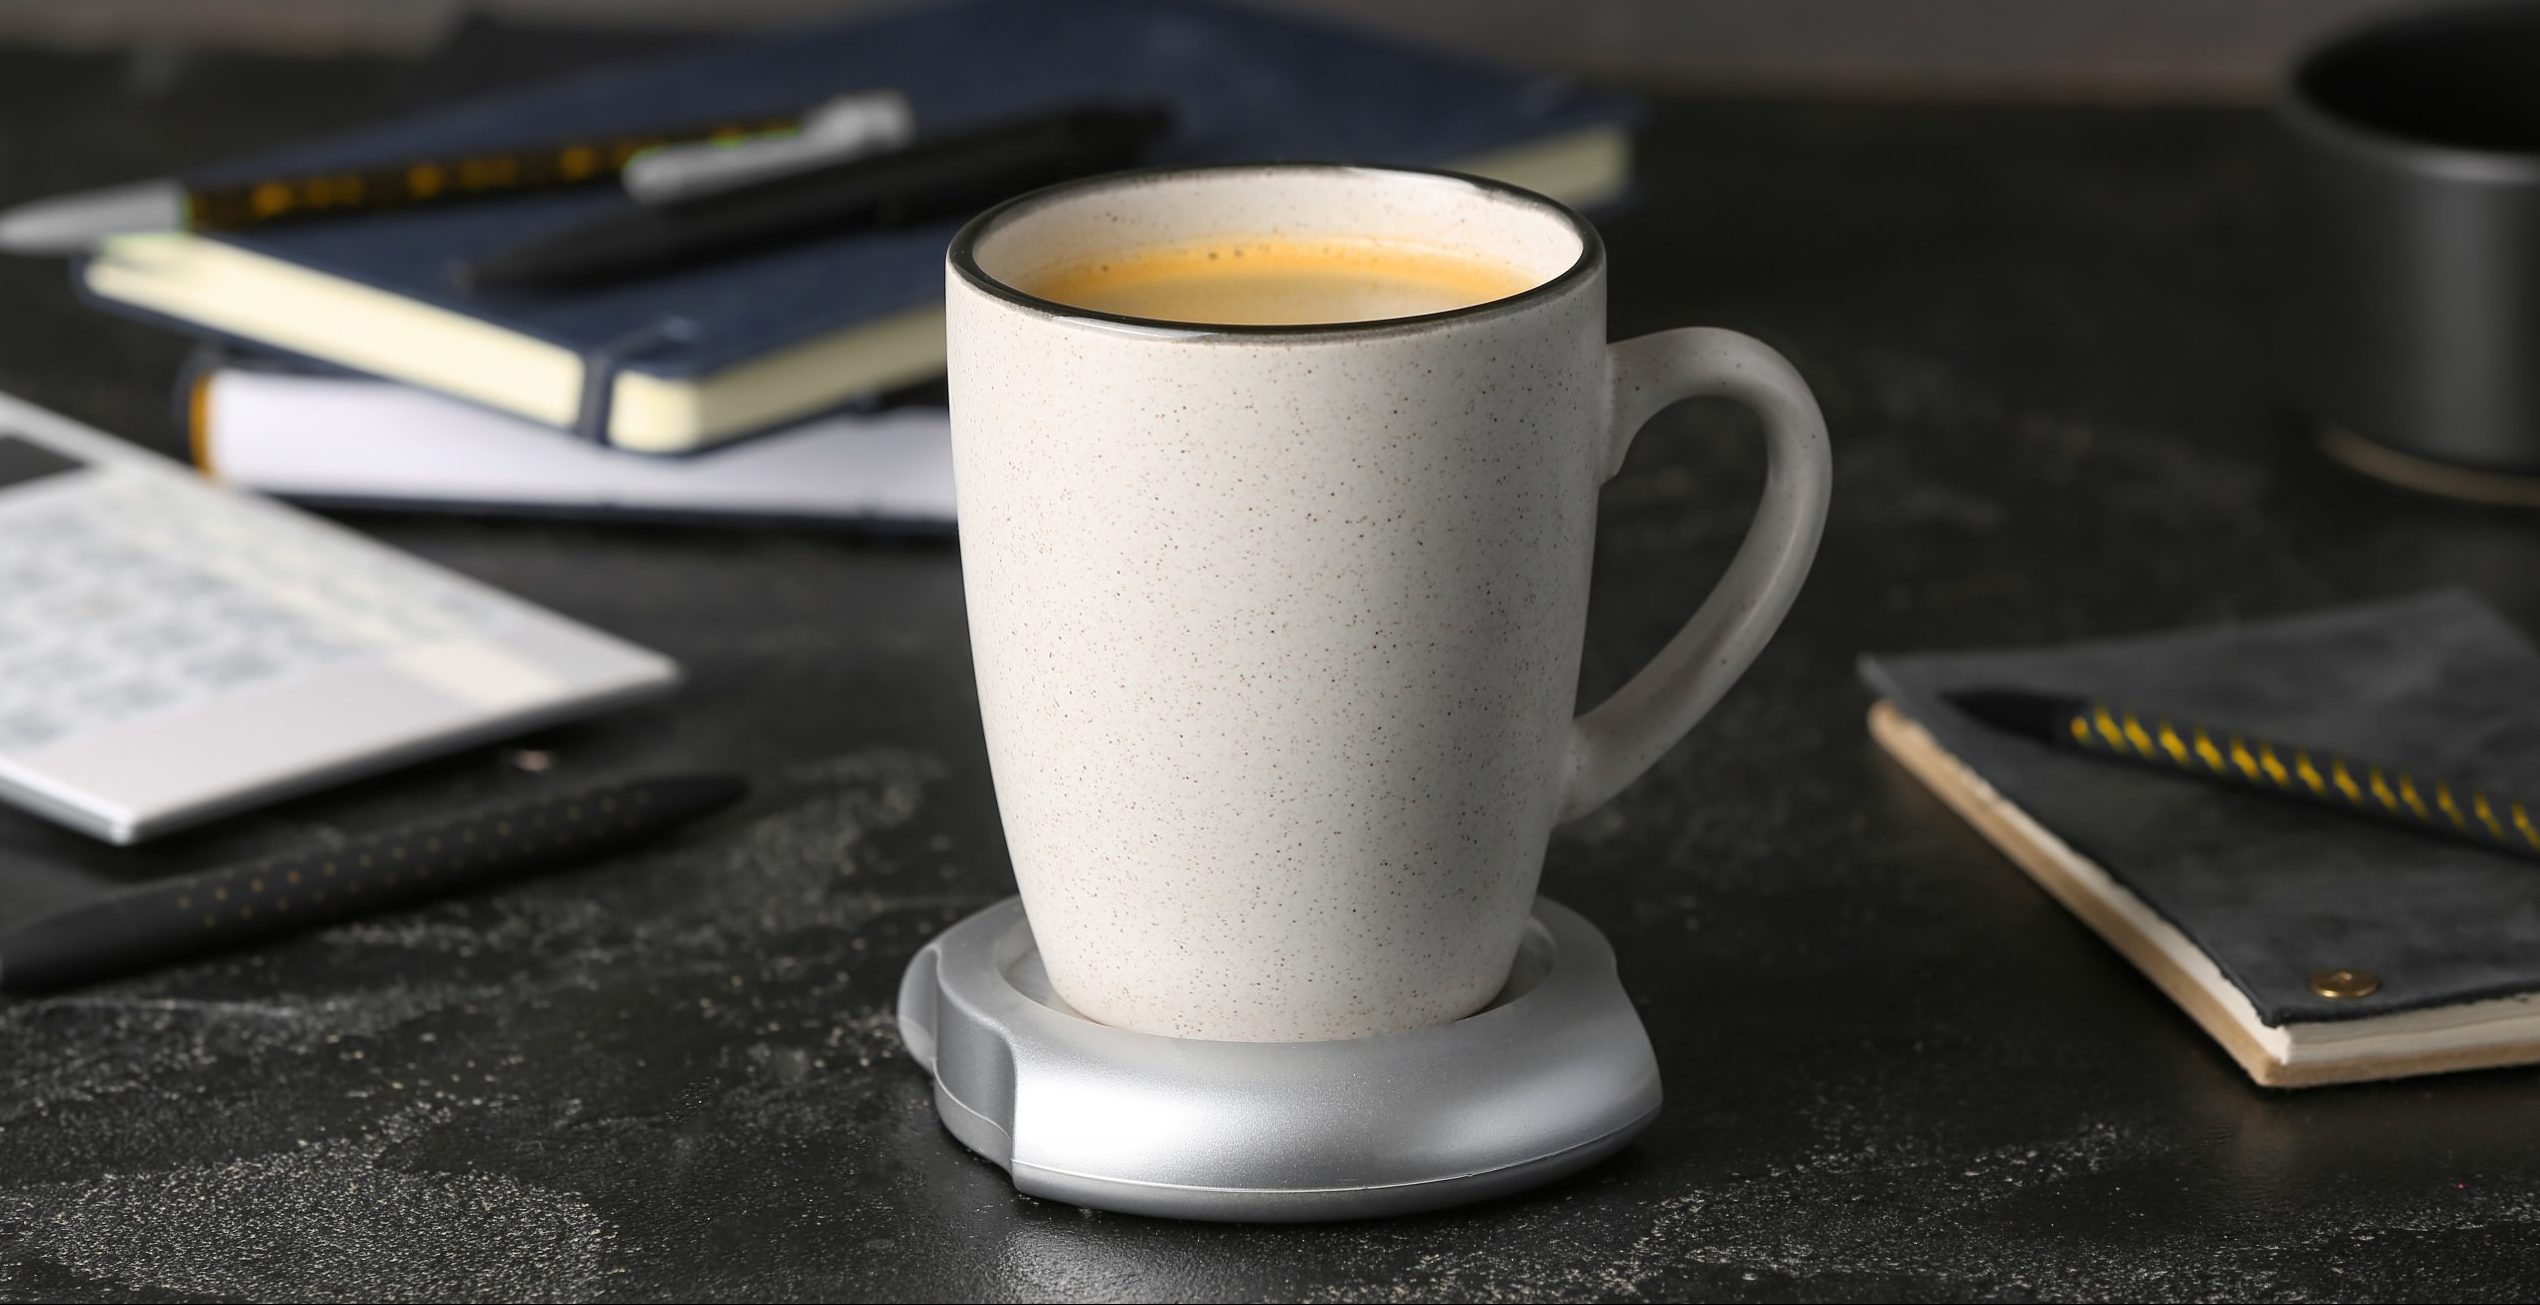 VOBAGA Coffee Mug Warmer, Electric Warmer for Desk with Auto Deep Blue